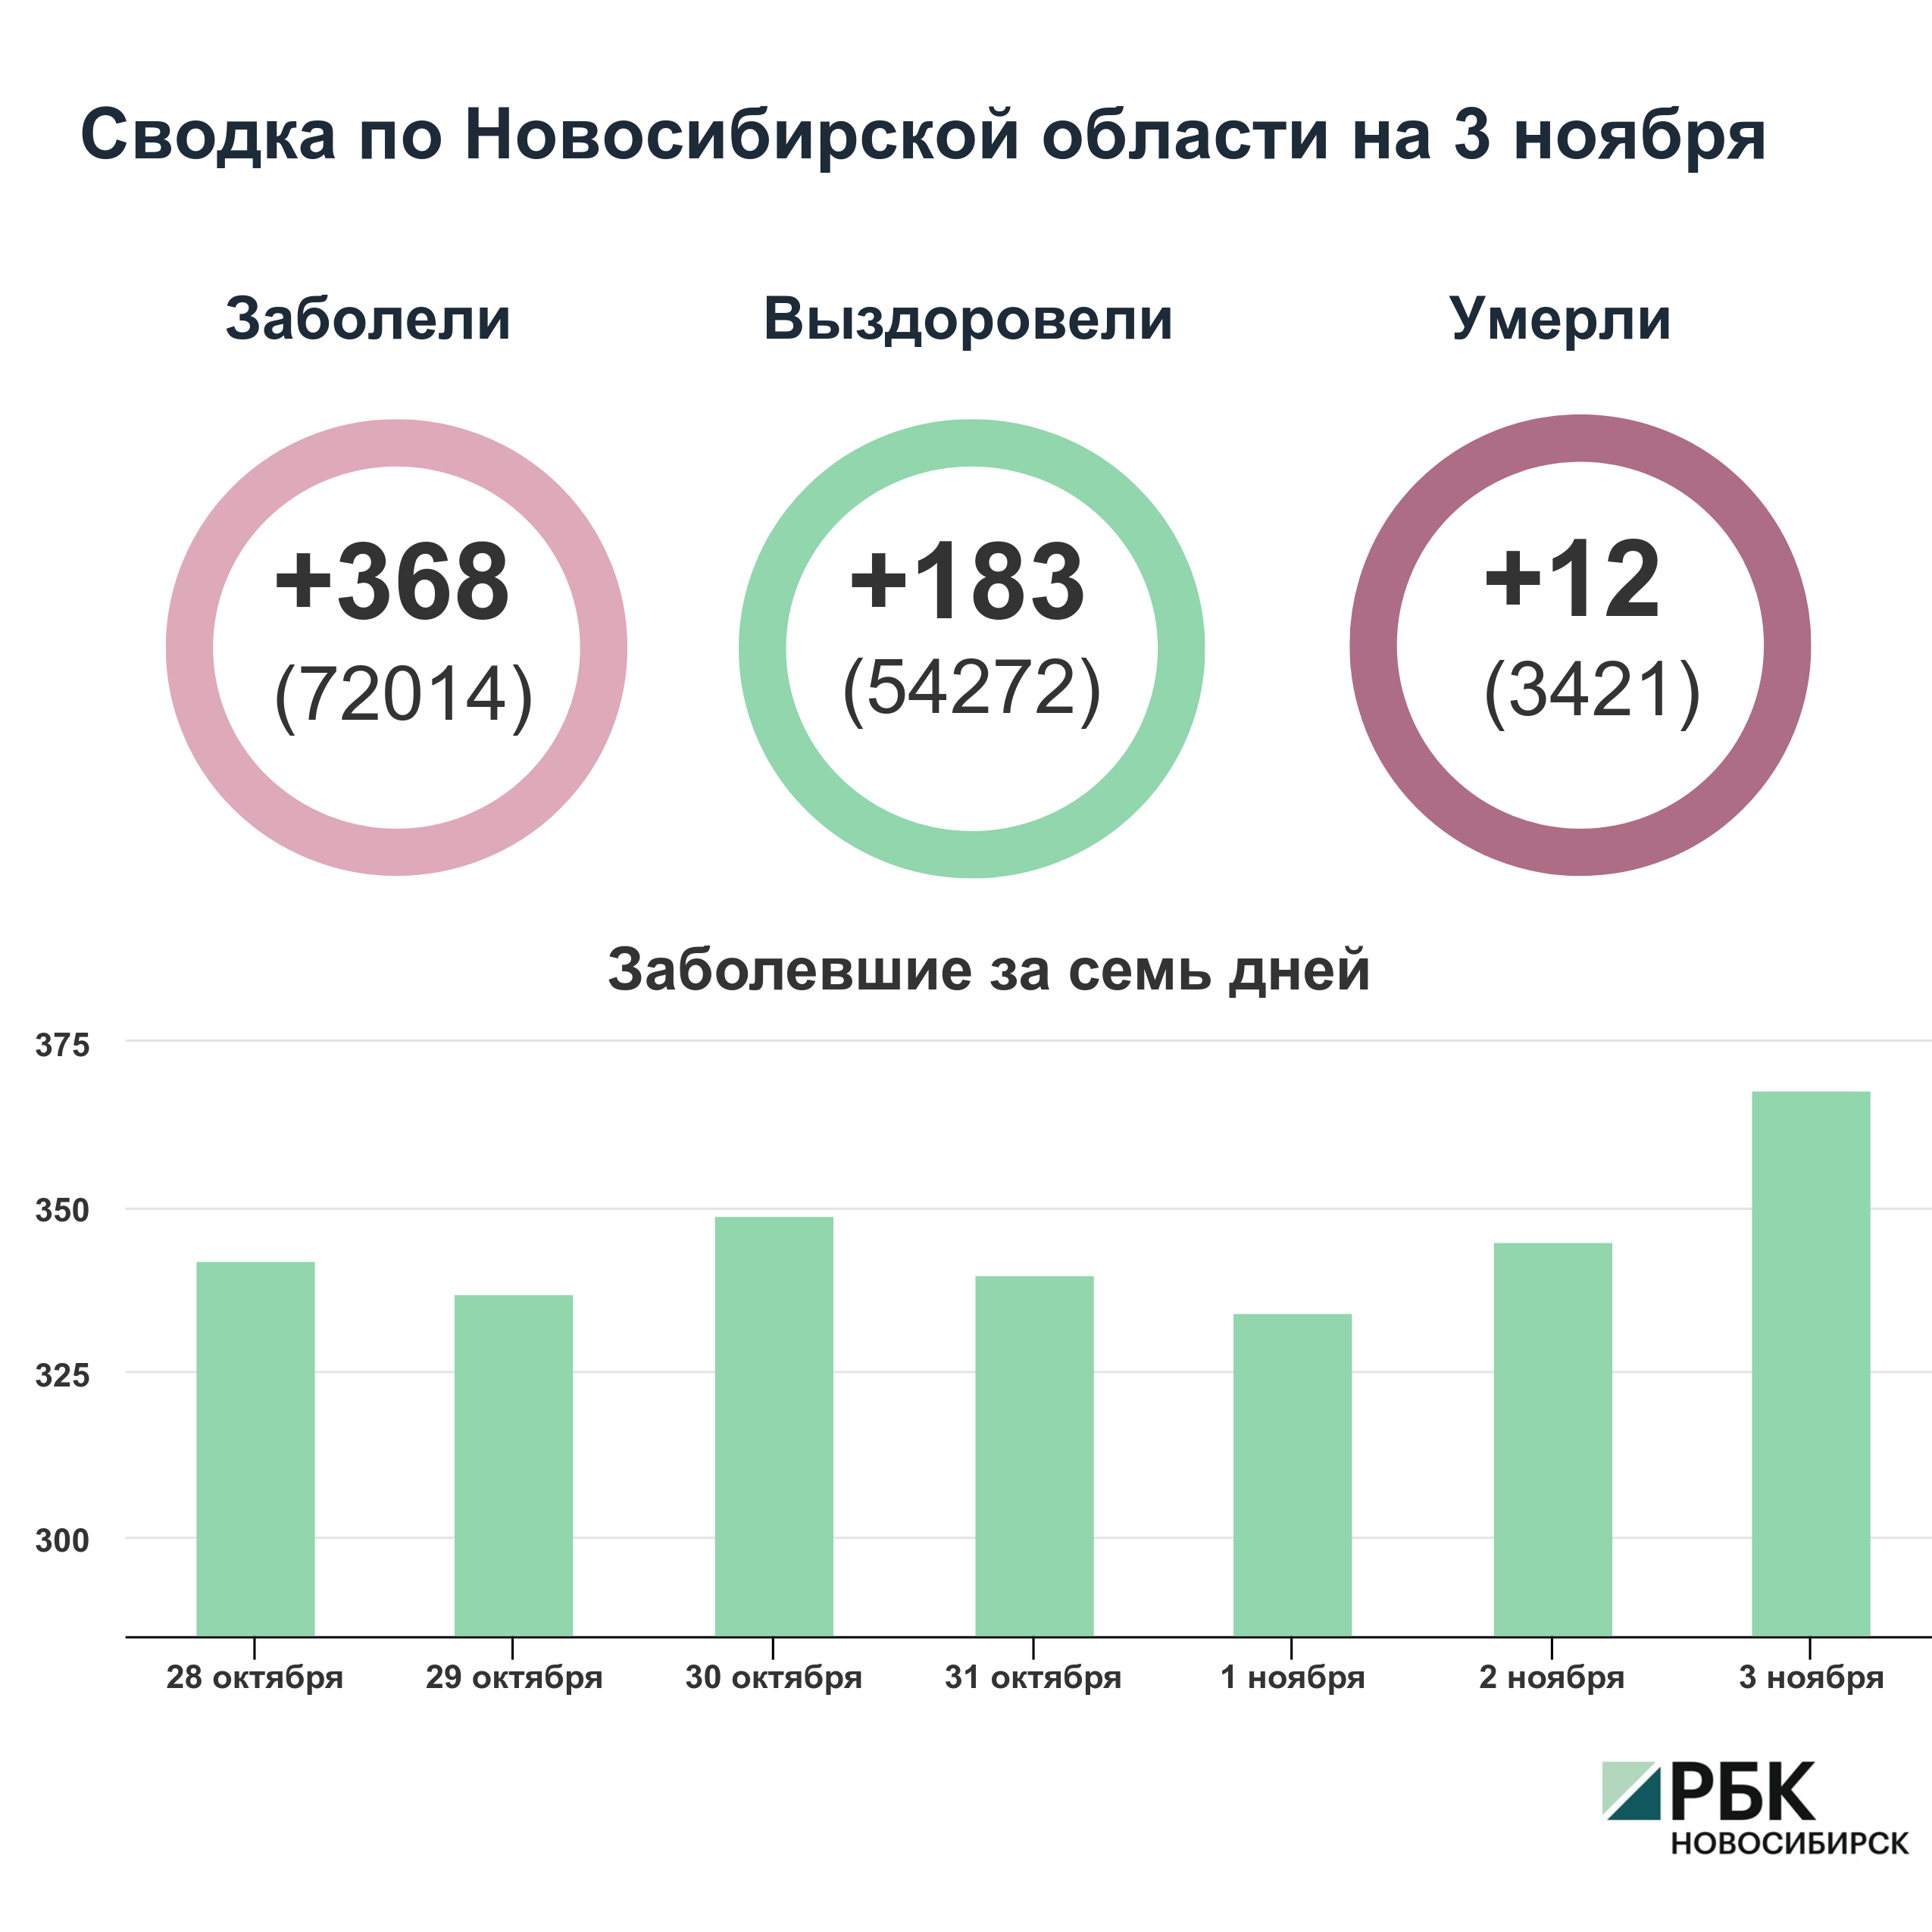 Коронавирус в Новосибирске: сводка на 3 ноября